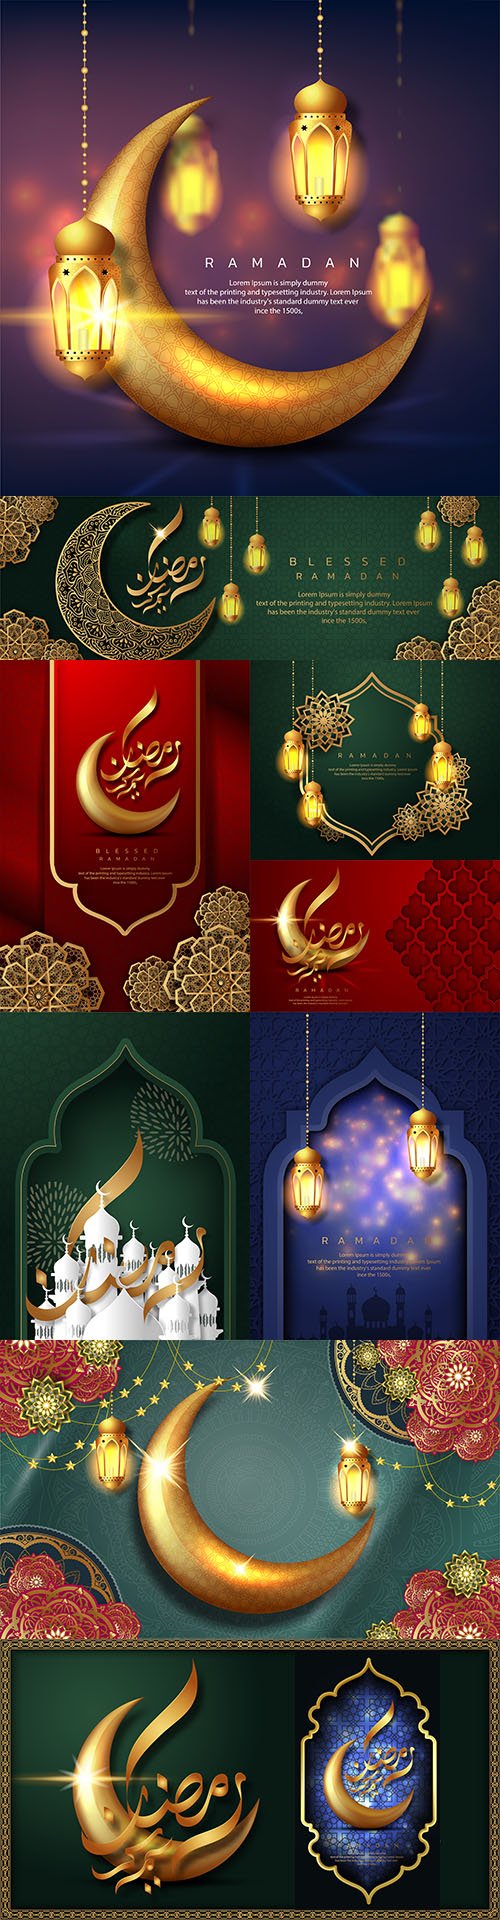 Ramadan Kareem Arab calligraphy design illustrations 19